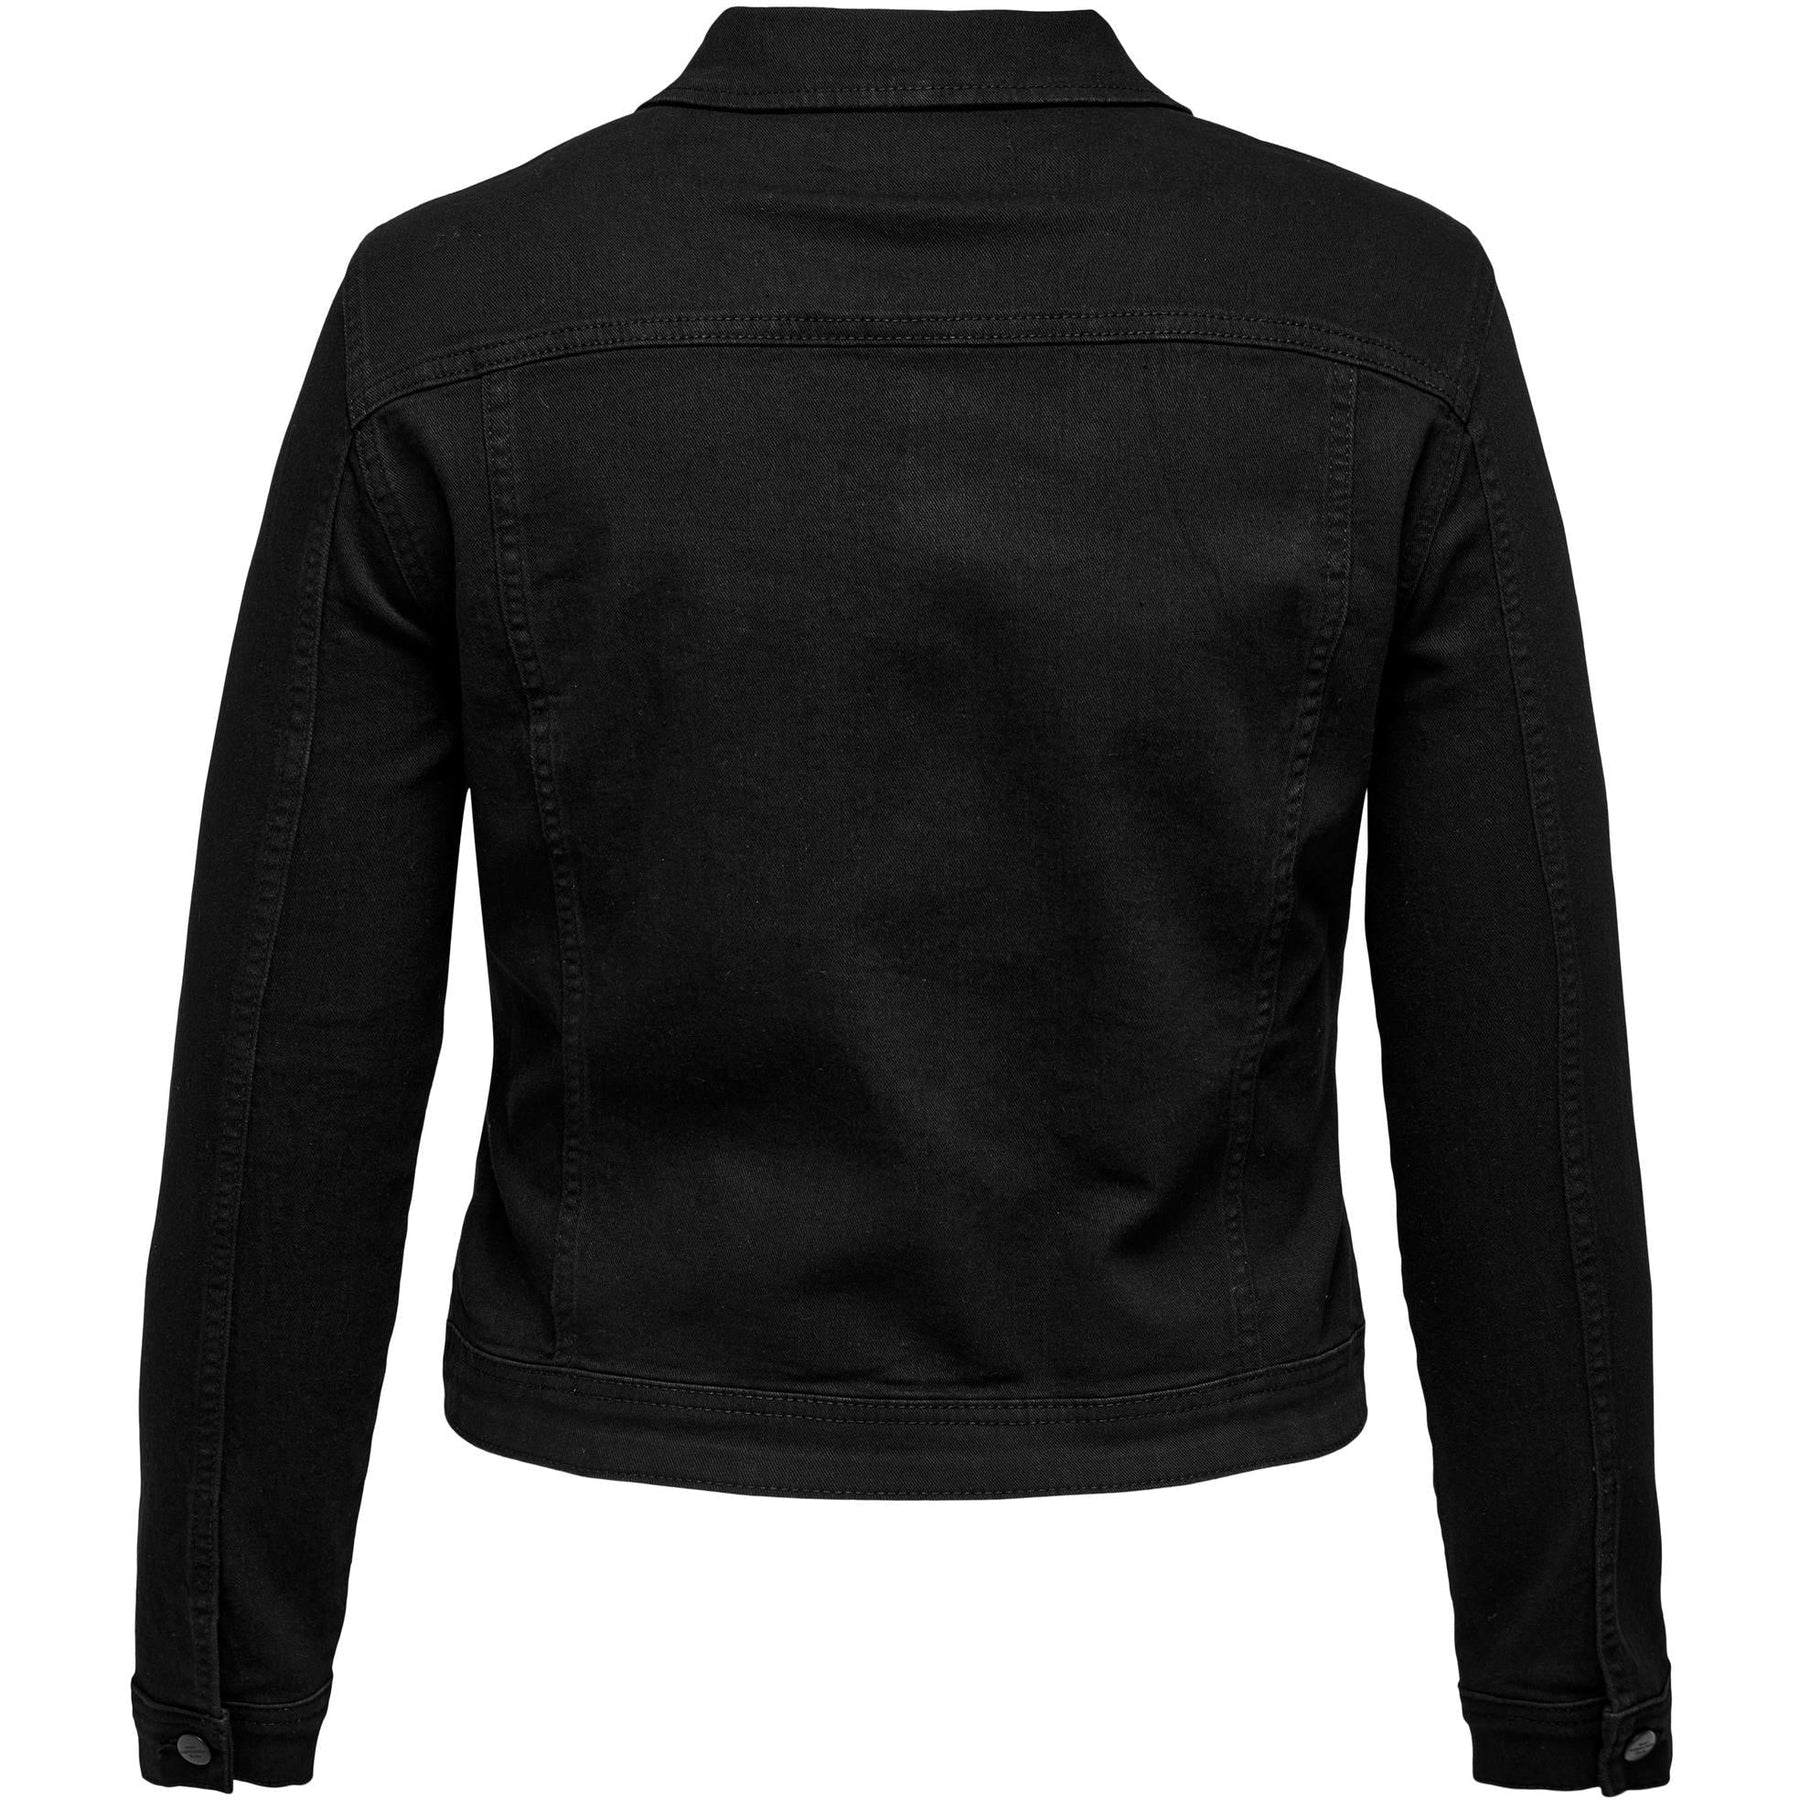 Only Carmakoma Denim Jacket in Black - Wardrobe Plus